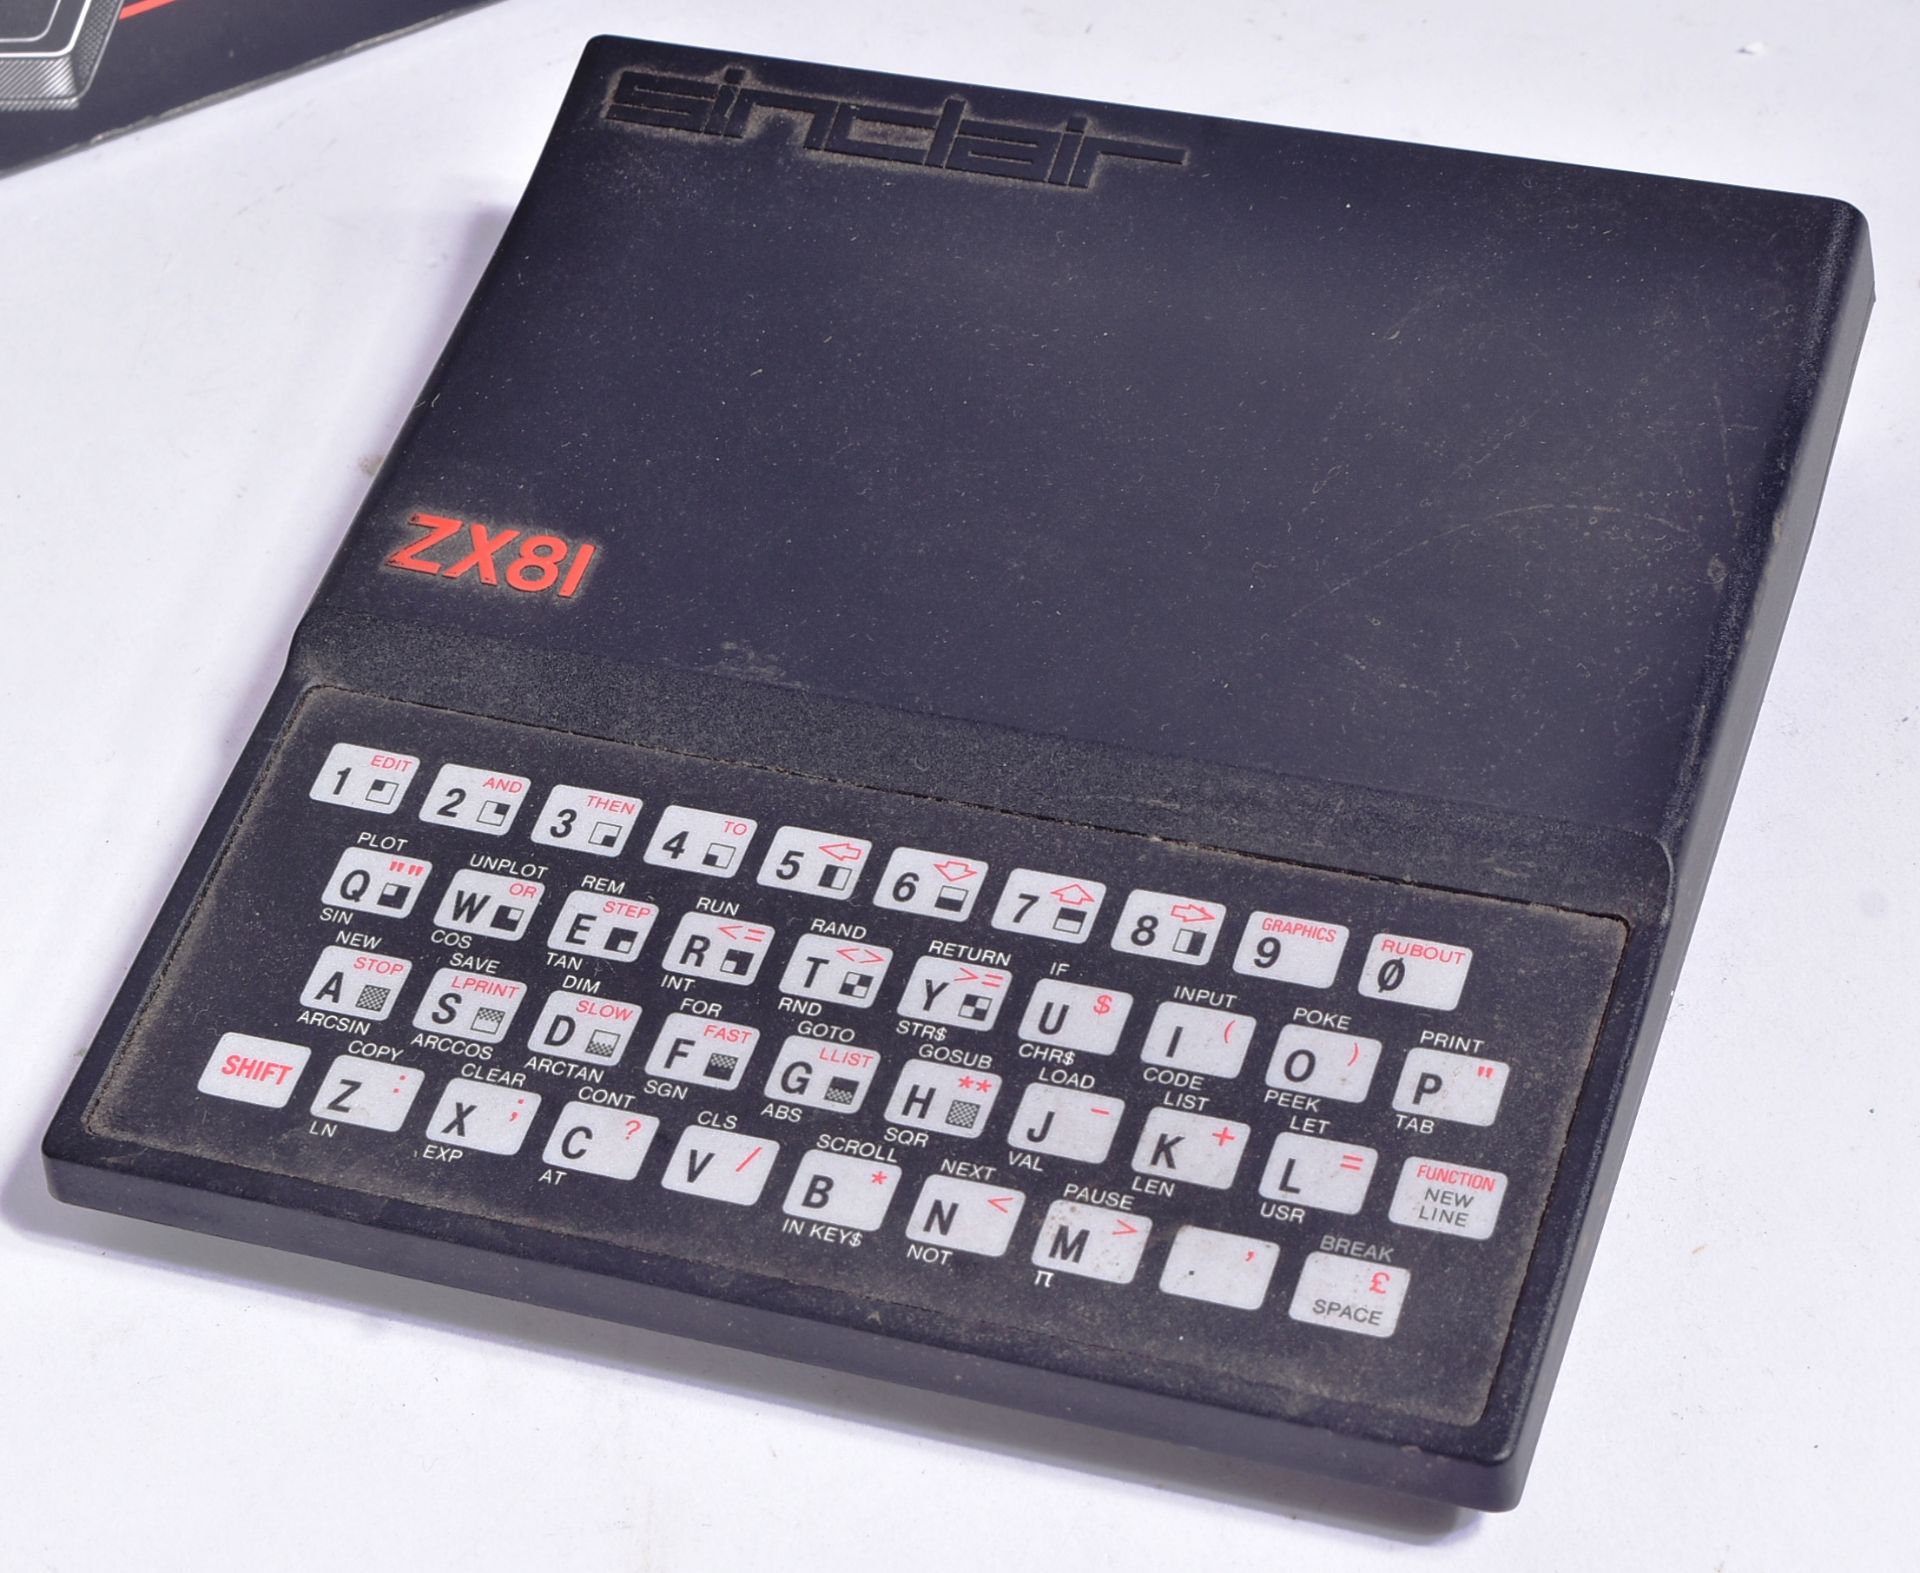 RETRO GAMING - VINTAGE SINCLAIR ZX81 PERSONAL COMPUTER - Bild 2 aus 6